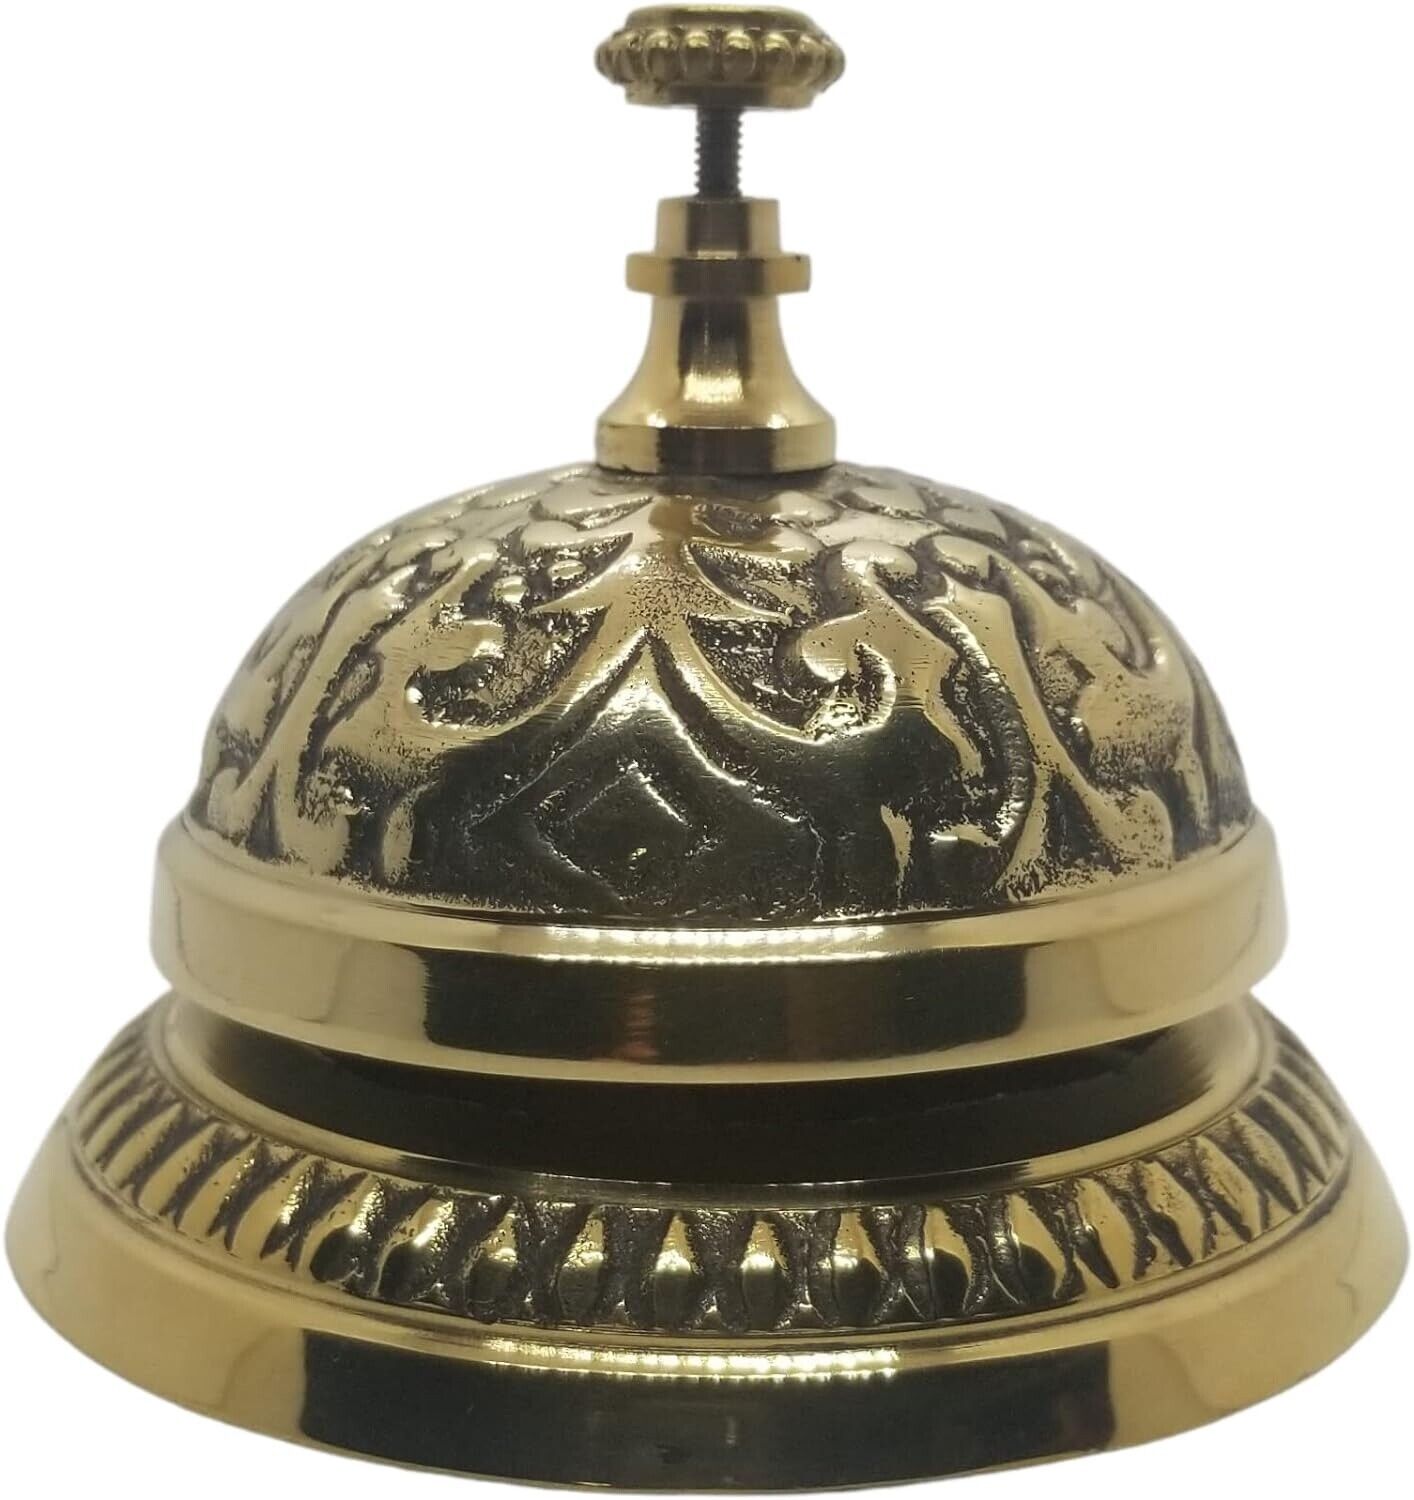 Ornate Victorian Shop Store Clerk Service Desk Bell Polished Brass Solid Brass